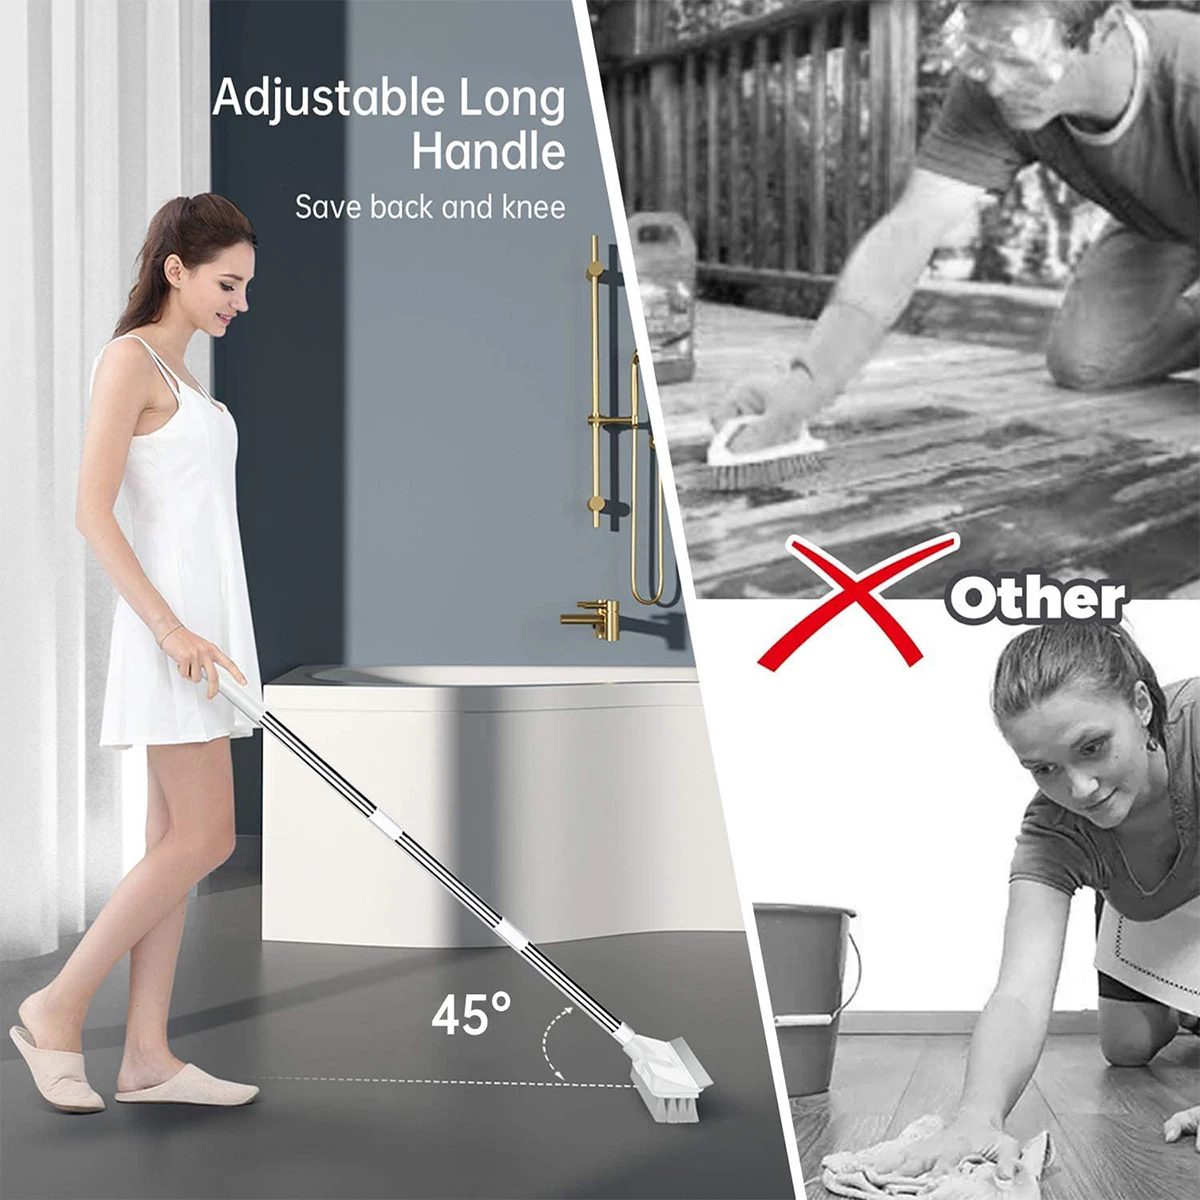 https://ae01.alicdn.com/kf/S063069e024114fe28b7f64d9042d3c79b/Multifunctional-Floor-Scrub-Brush-with-3-Pole-Adjustable-Long-Handle-2-In-1-Scrape-and-Brush.jpg